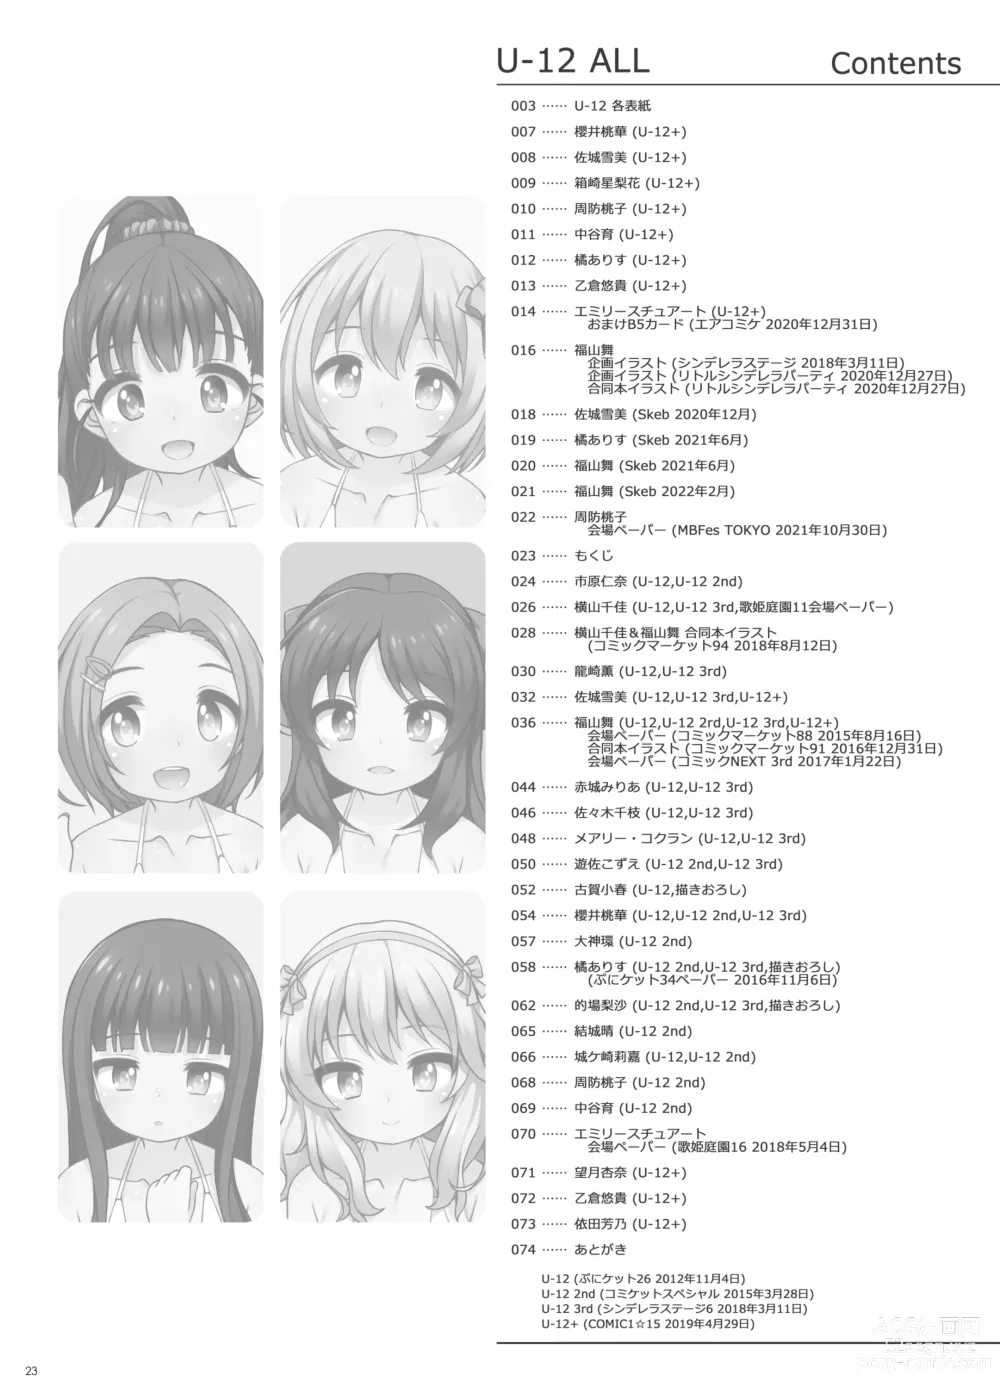 Page 23 of doujinshi U-12 ALL